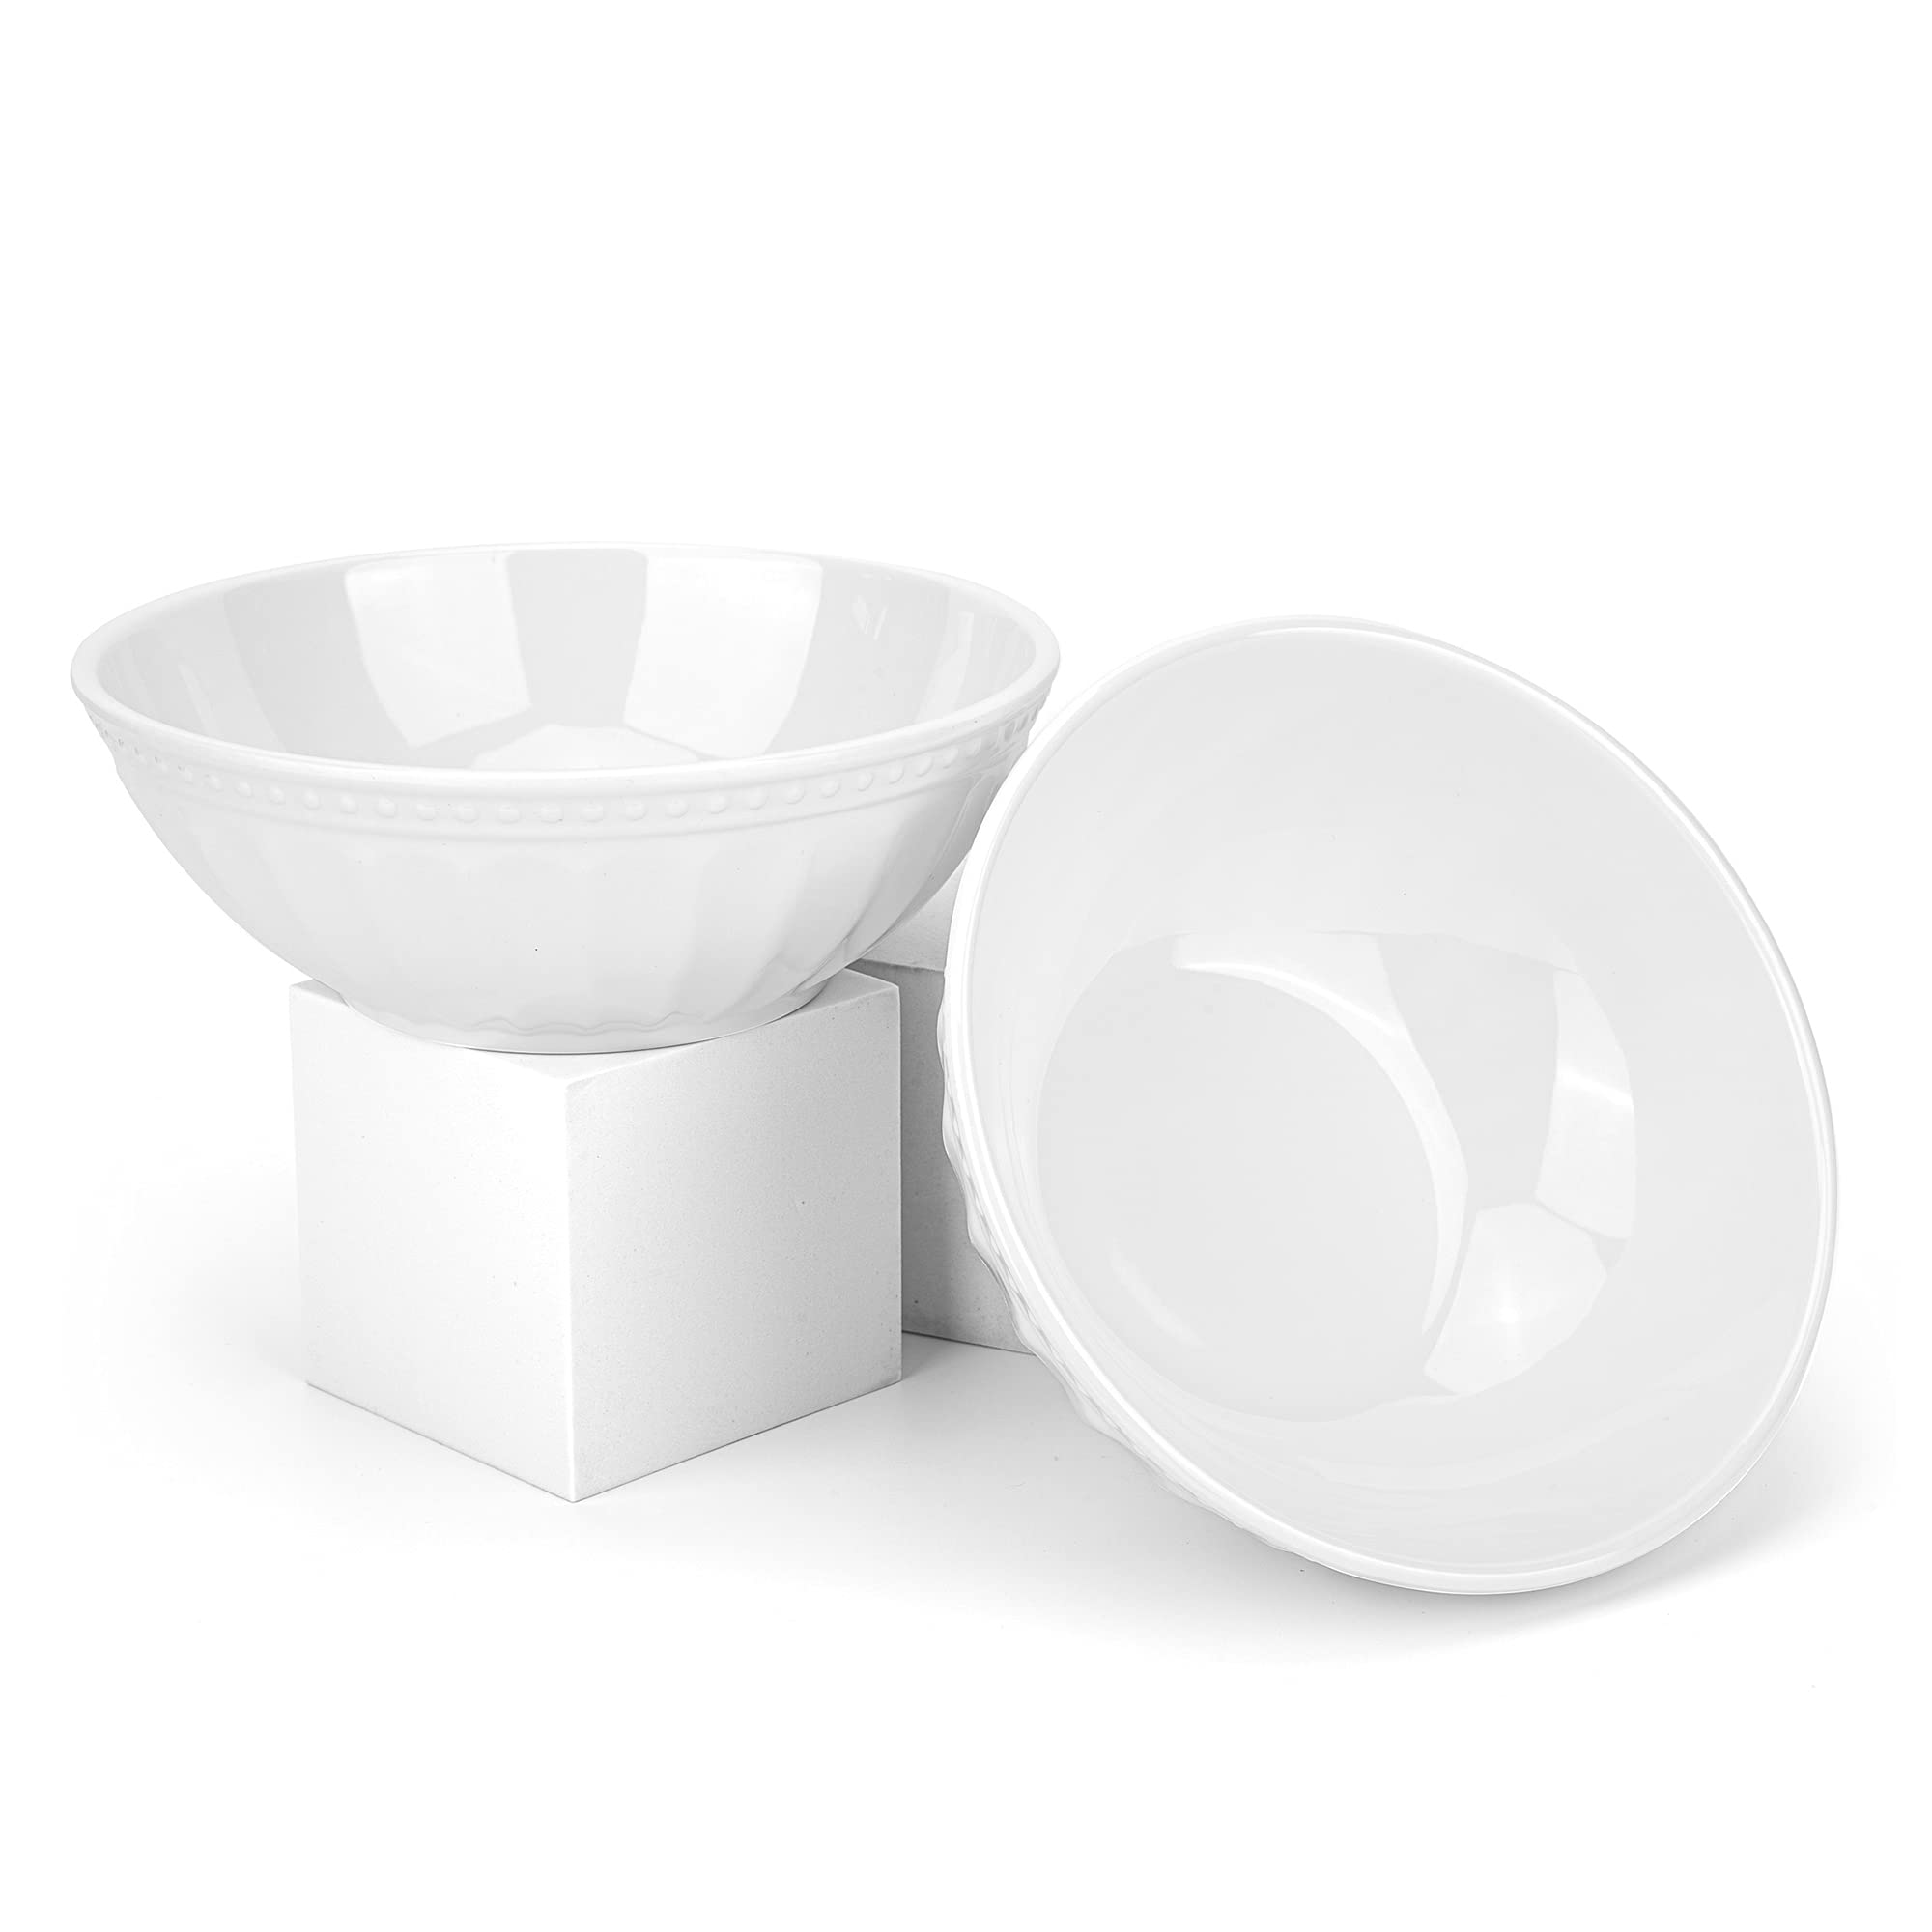 KX-WARE 7-inch Melamine Bowls, 30-ounce Salad/Pasta/Dinner Bowls | set of 6, White